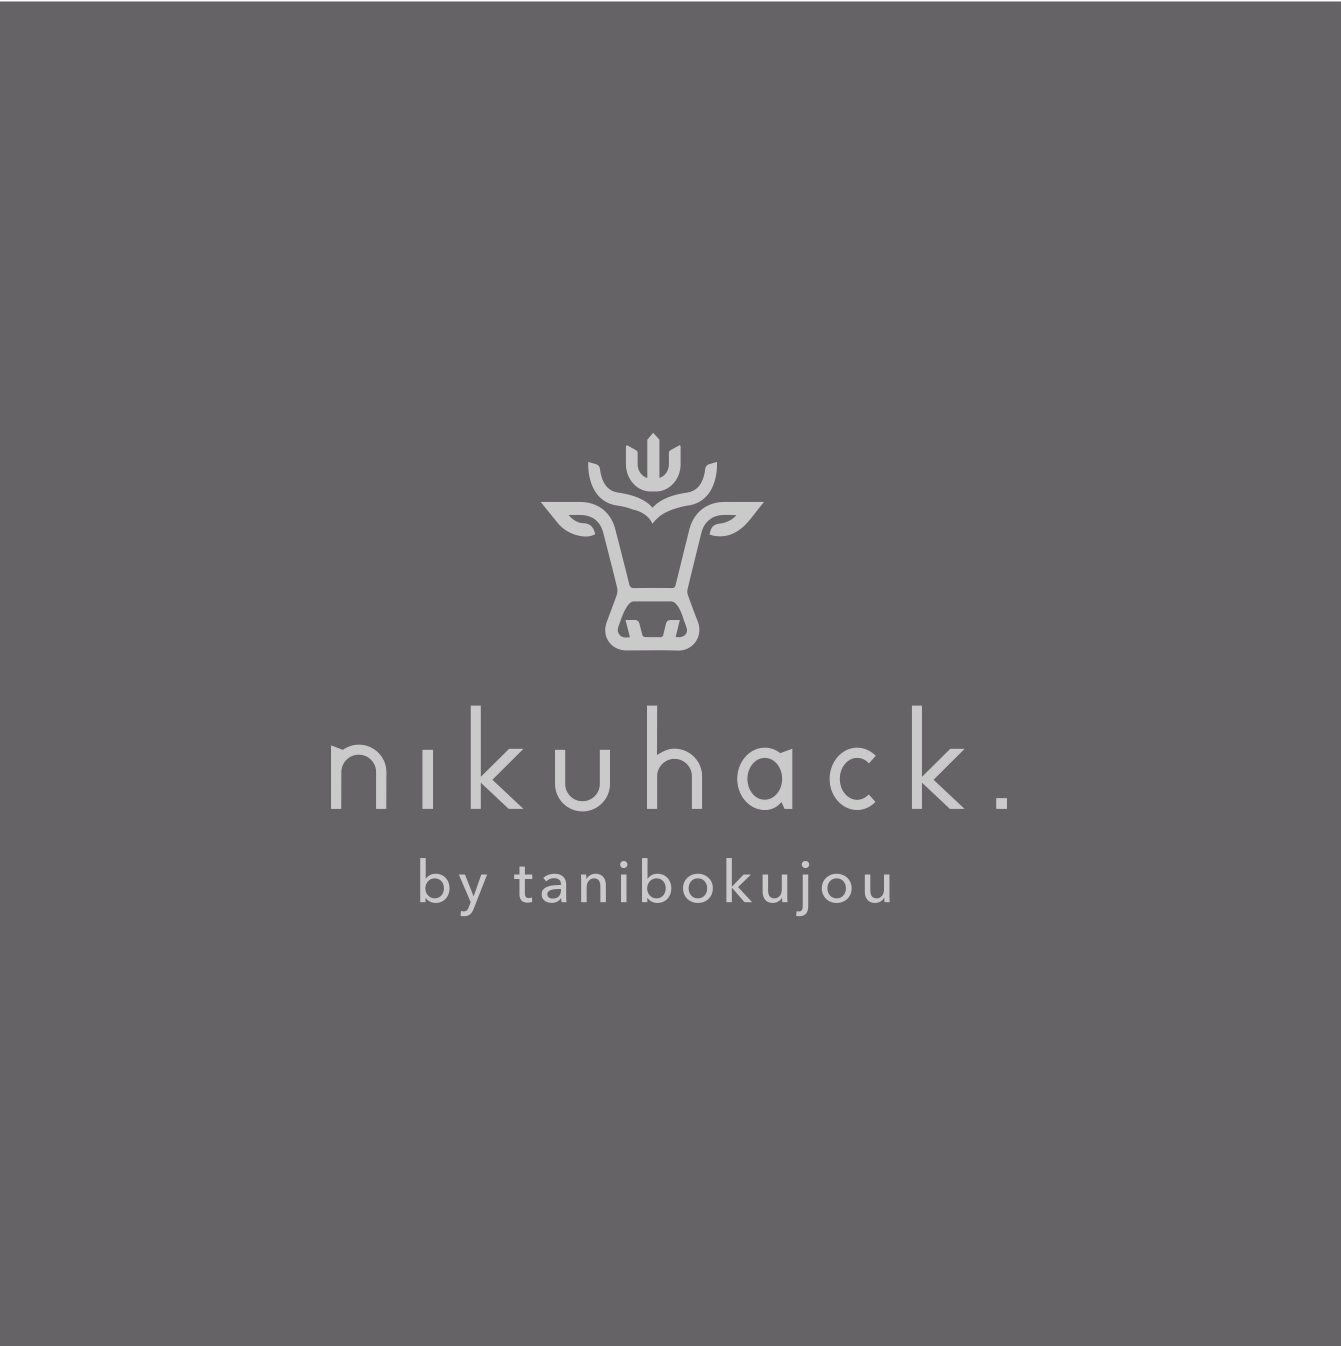 nikuhackサイトリニューアルオープン&送料改定のお知らせ